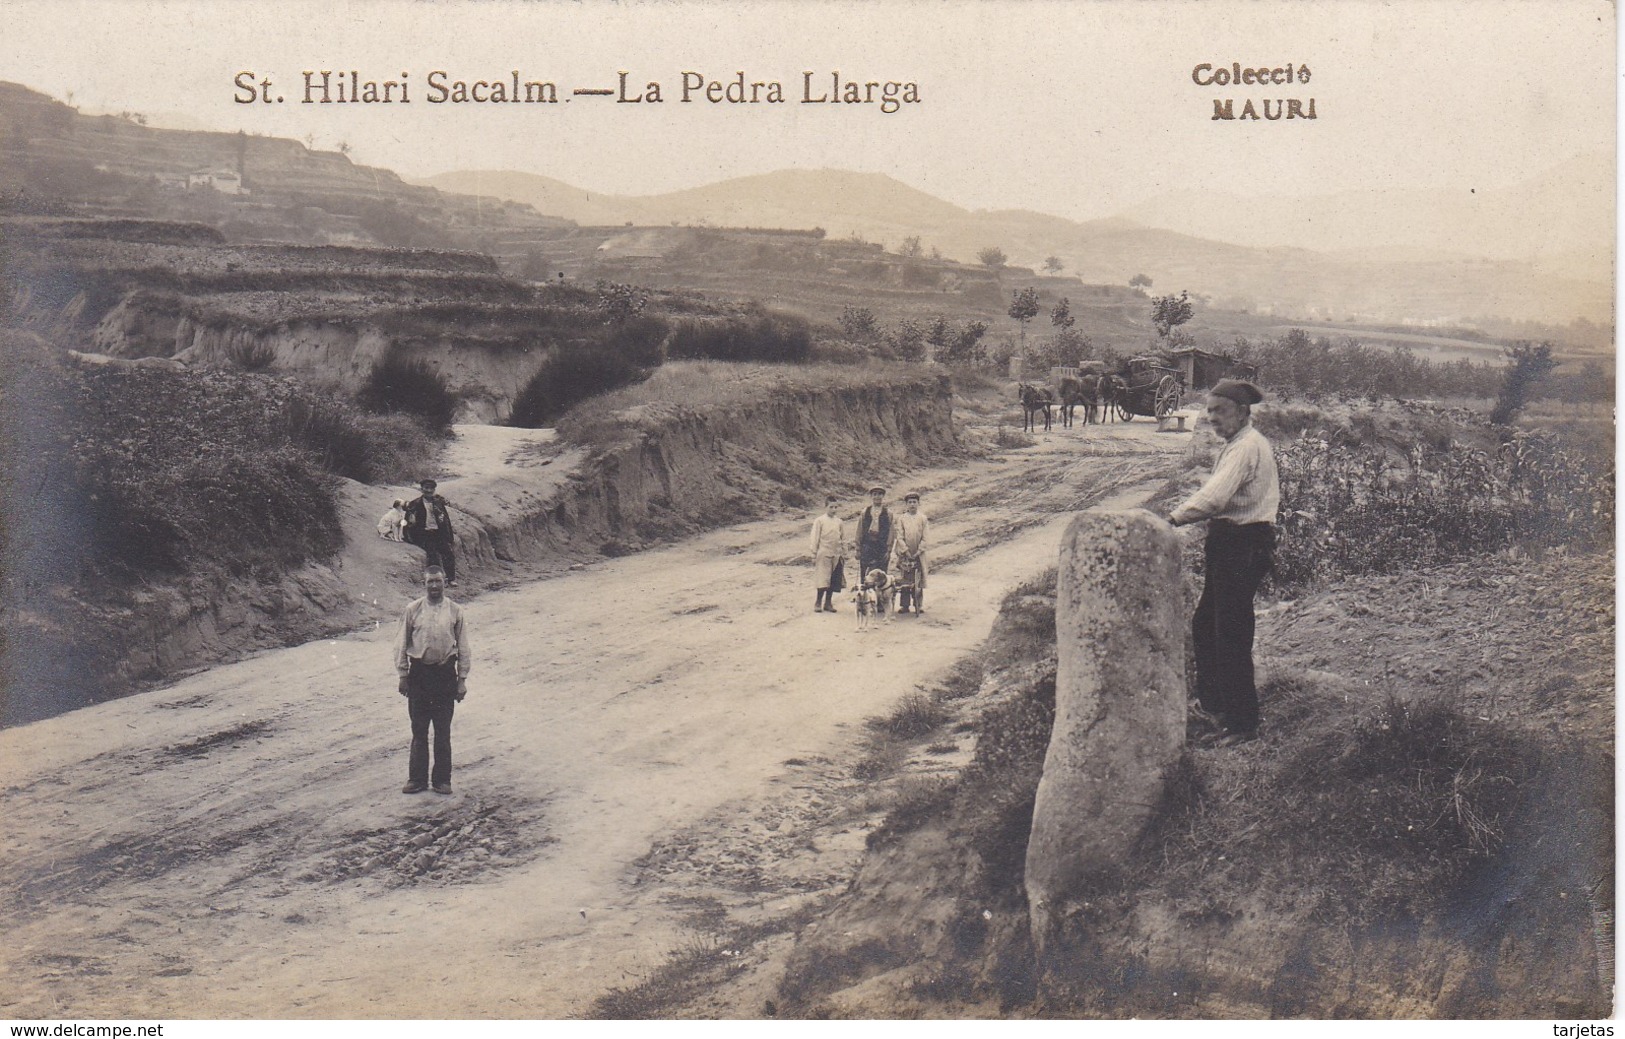 POSTAL DE SAN HILARI SACALM DE LA PEDRA LLARGA (COLECCIO MAURI) (GIRONA-GERONA) - Gerona